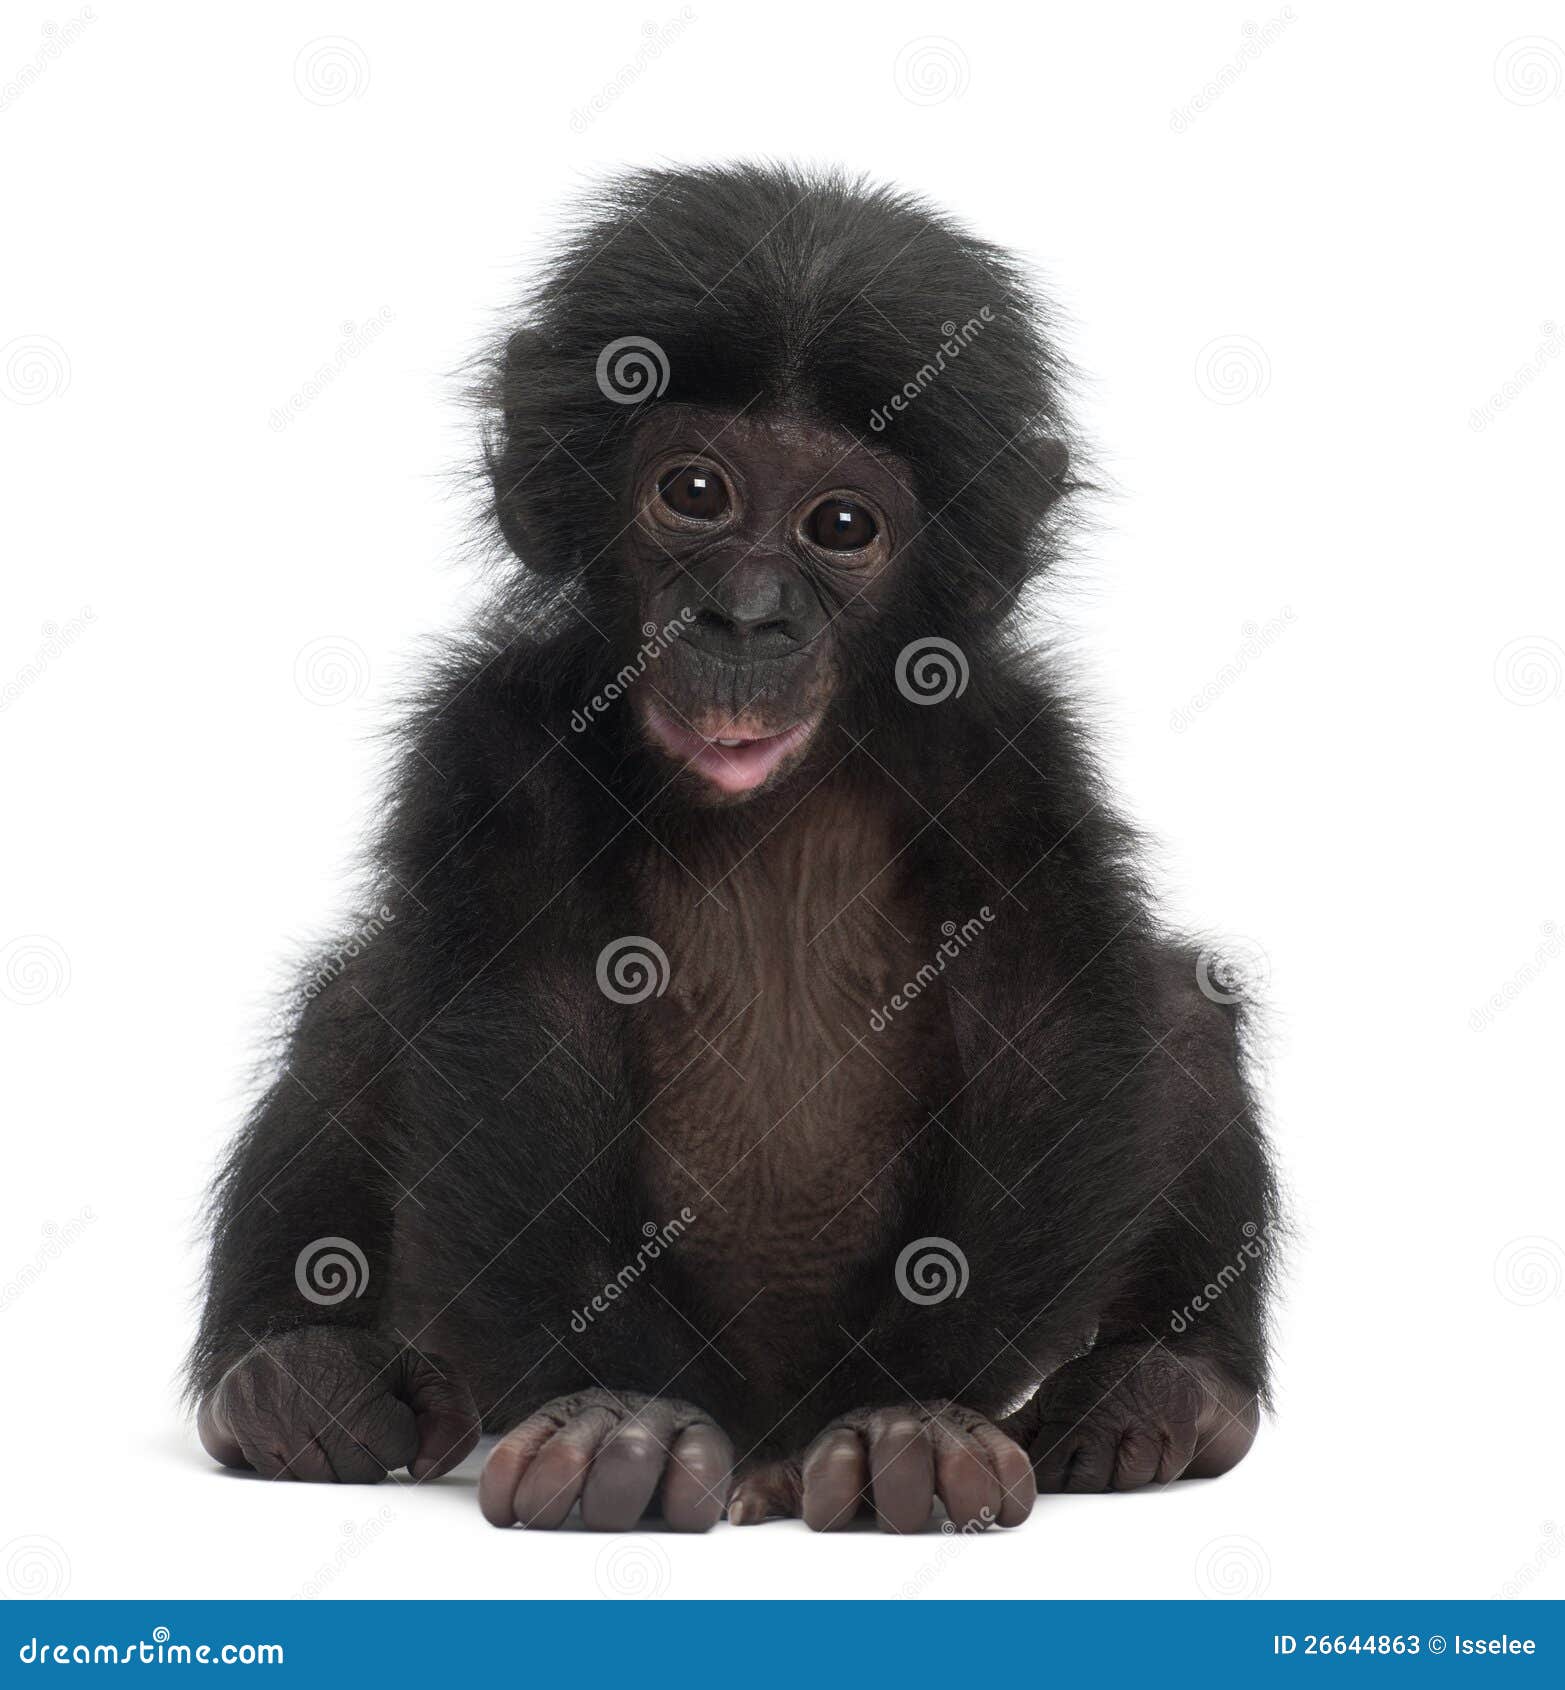 baby bonobo, pan paniscus, 4 months old, sitting